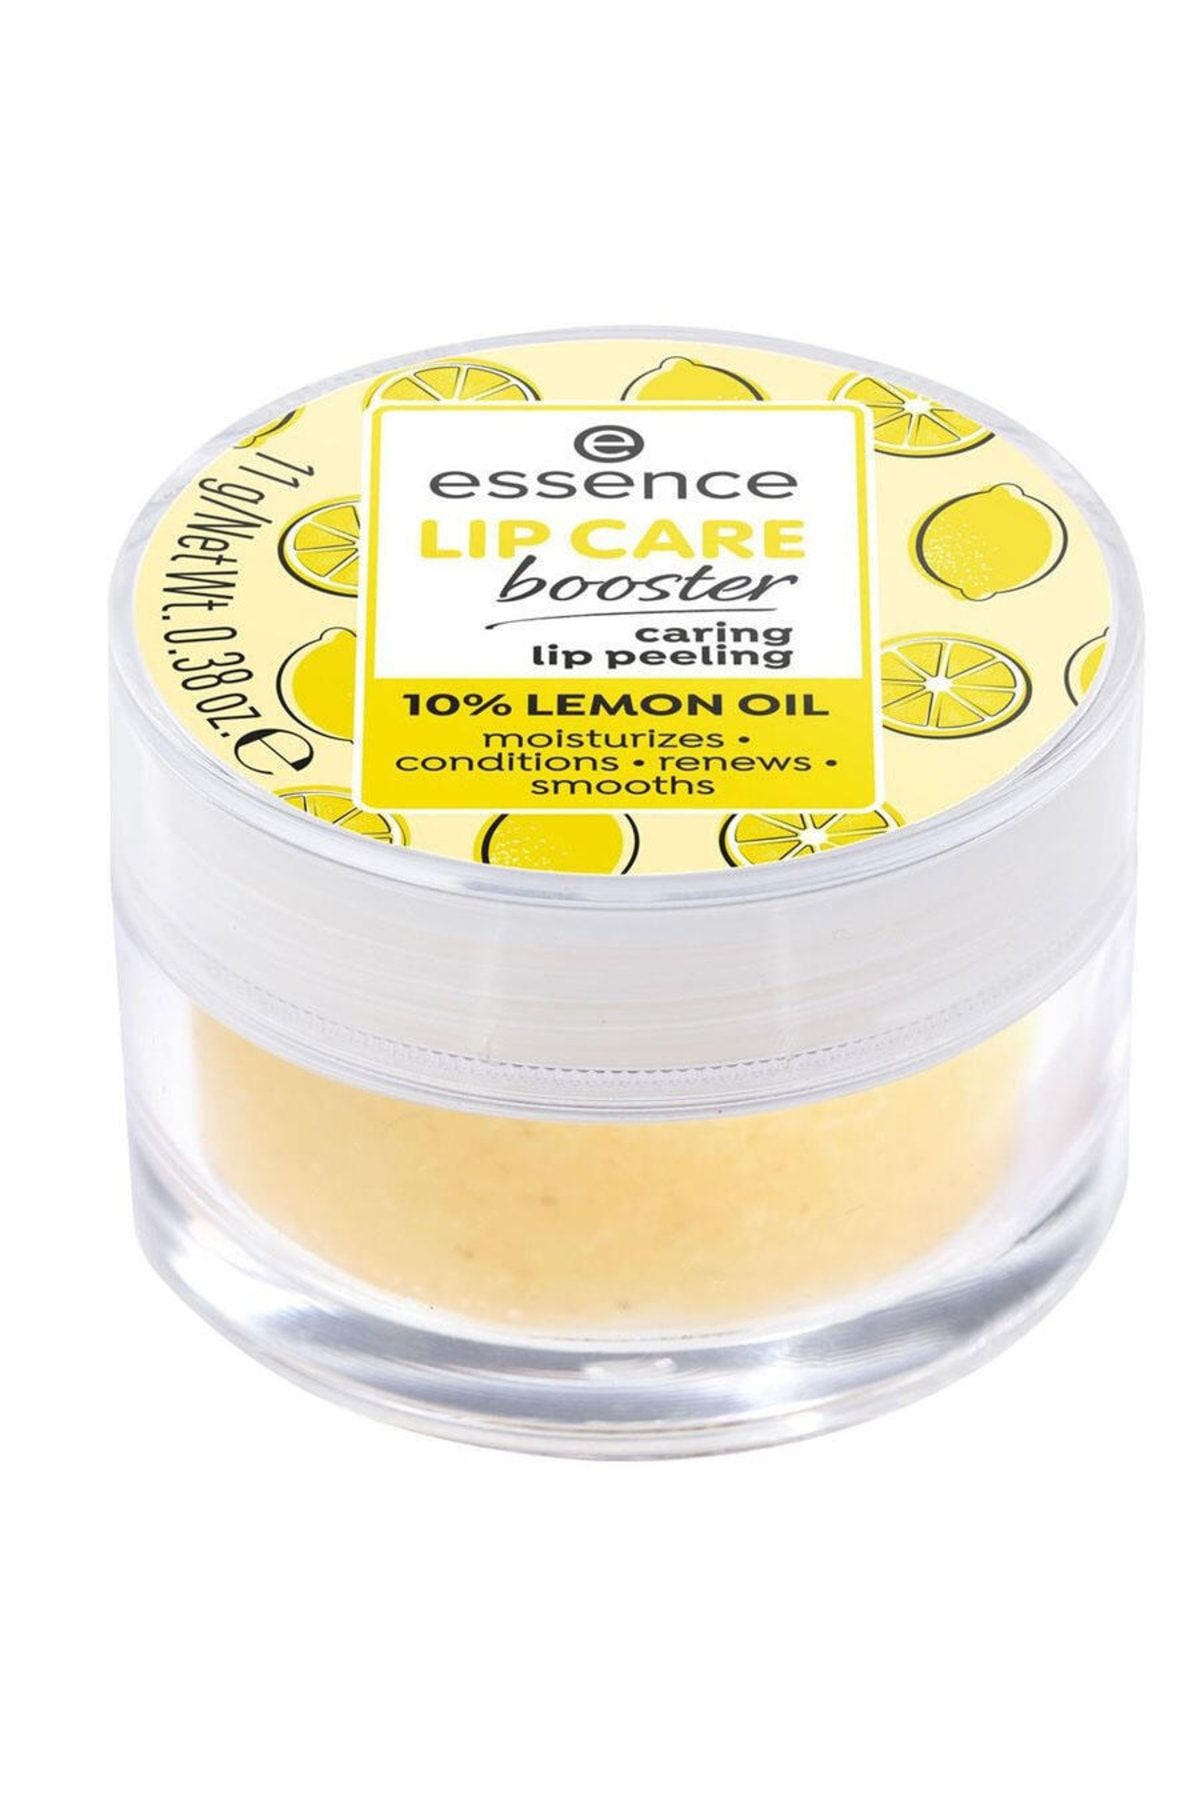 Essence Lip Care Booster Lip Peeling Lemon Oil - Dudak Peelingi